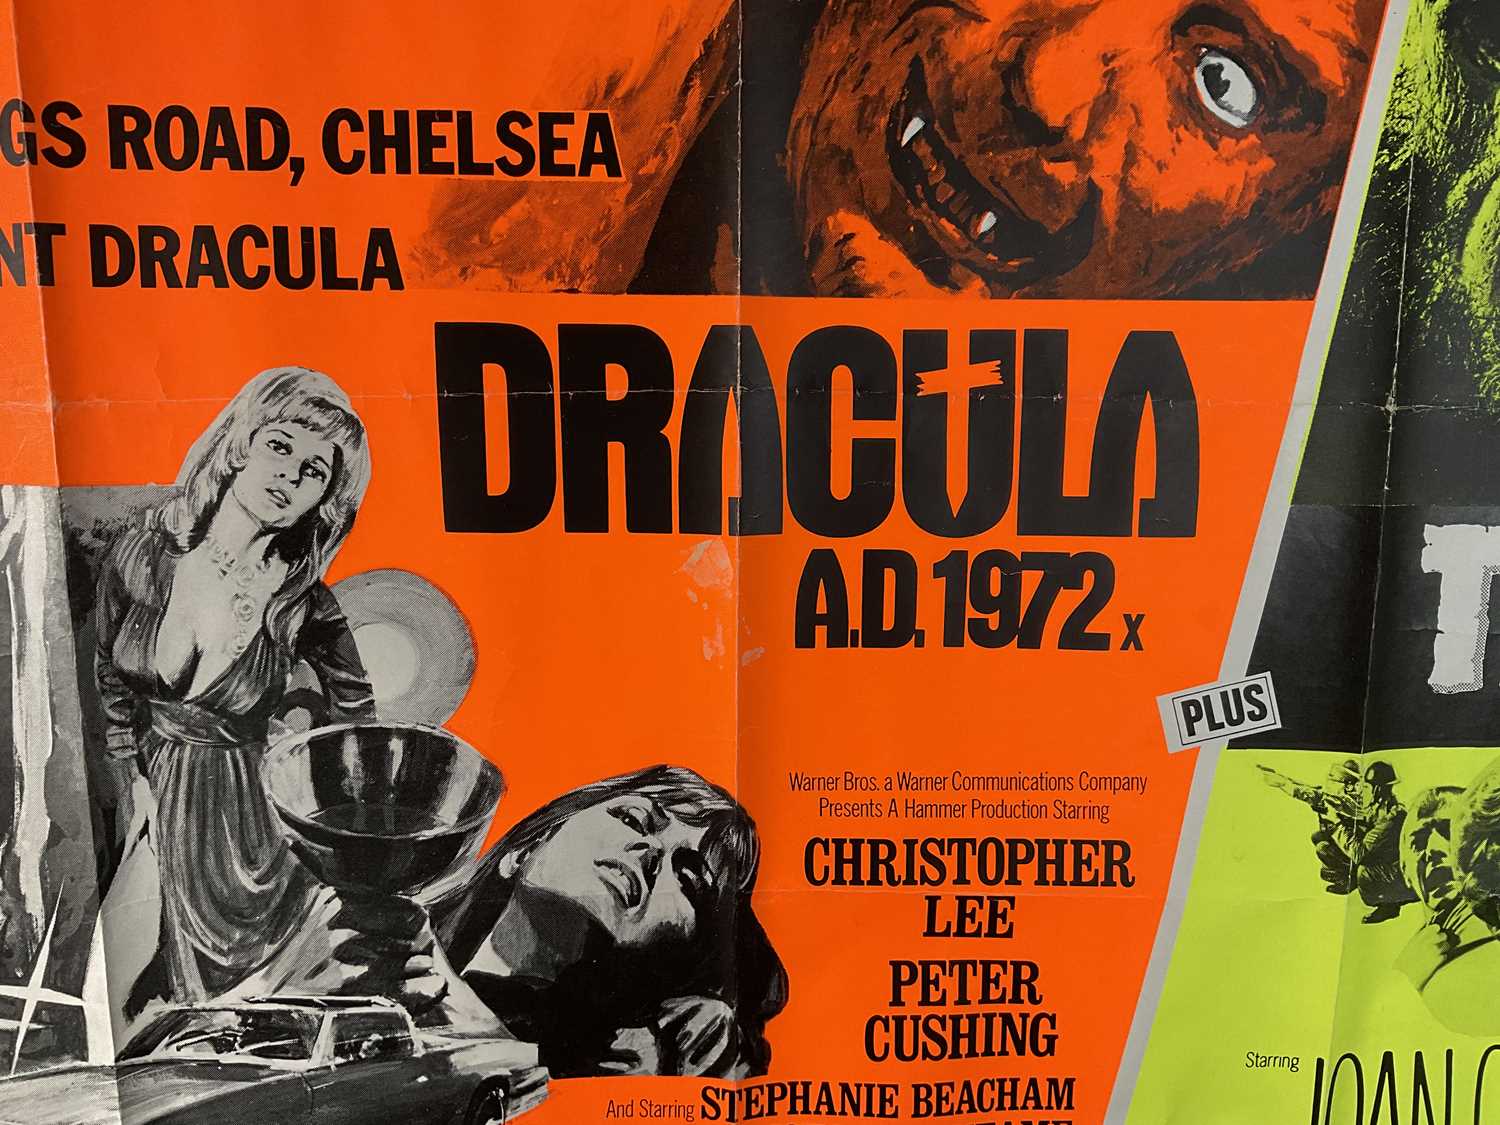 DRACULA A.D. 1972 / TROG (1972) Double-Bill UK Quad film poster, Tom Chantrell artwork classic - Image 6 of 8